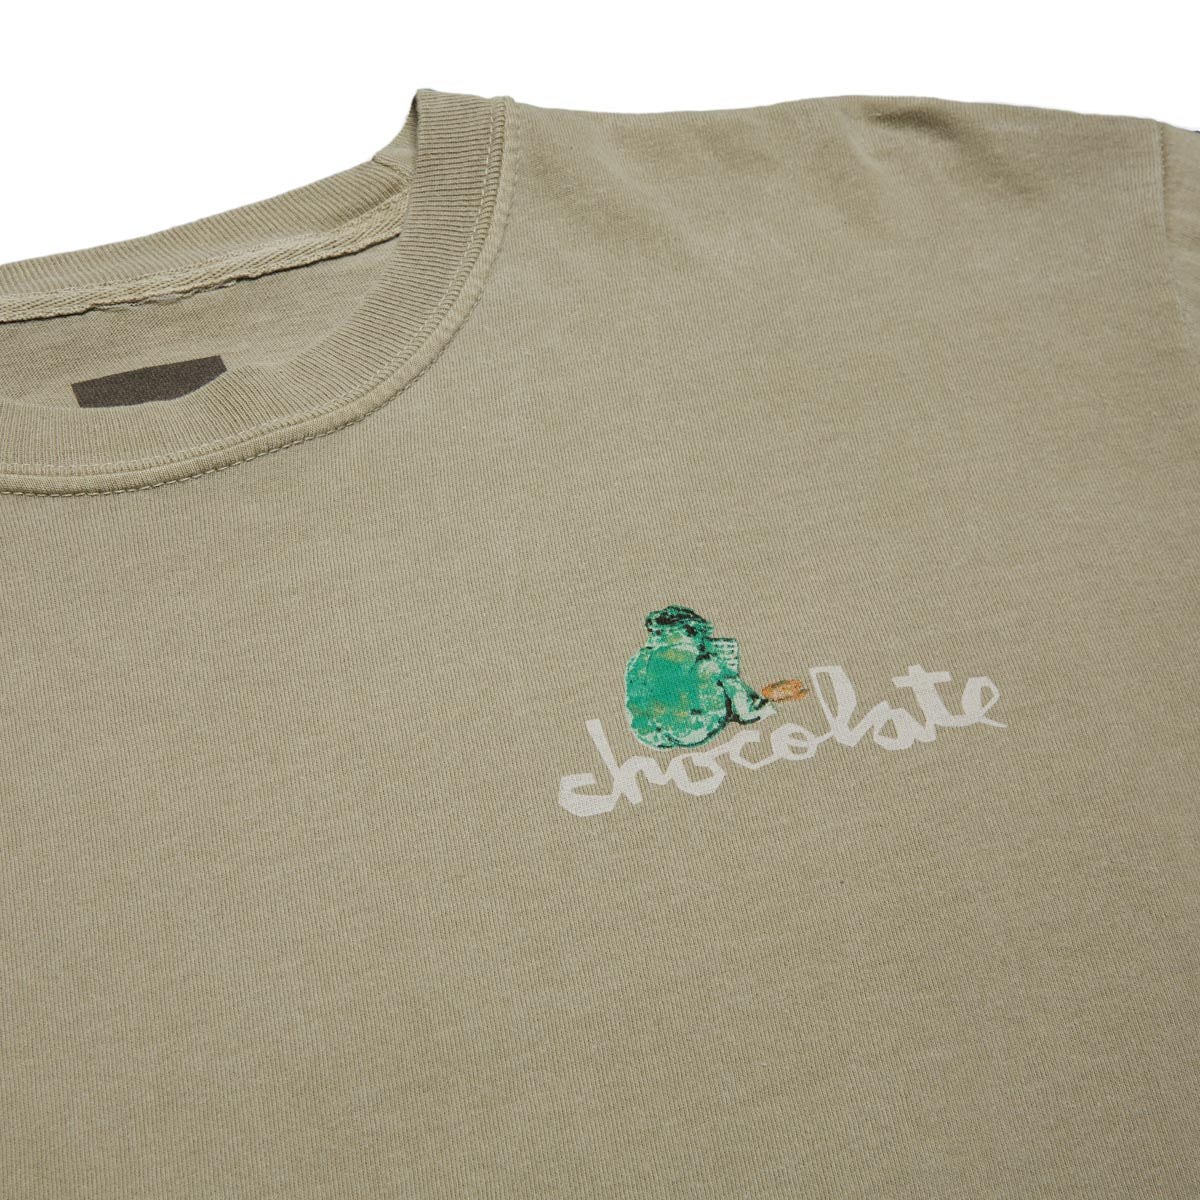 Chocolate Dream Beach Long Sleeve T-Shirt - Khaki image 3